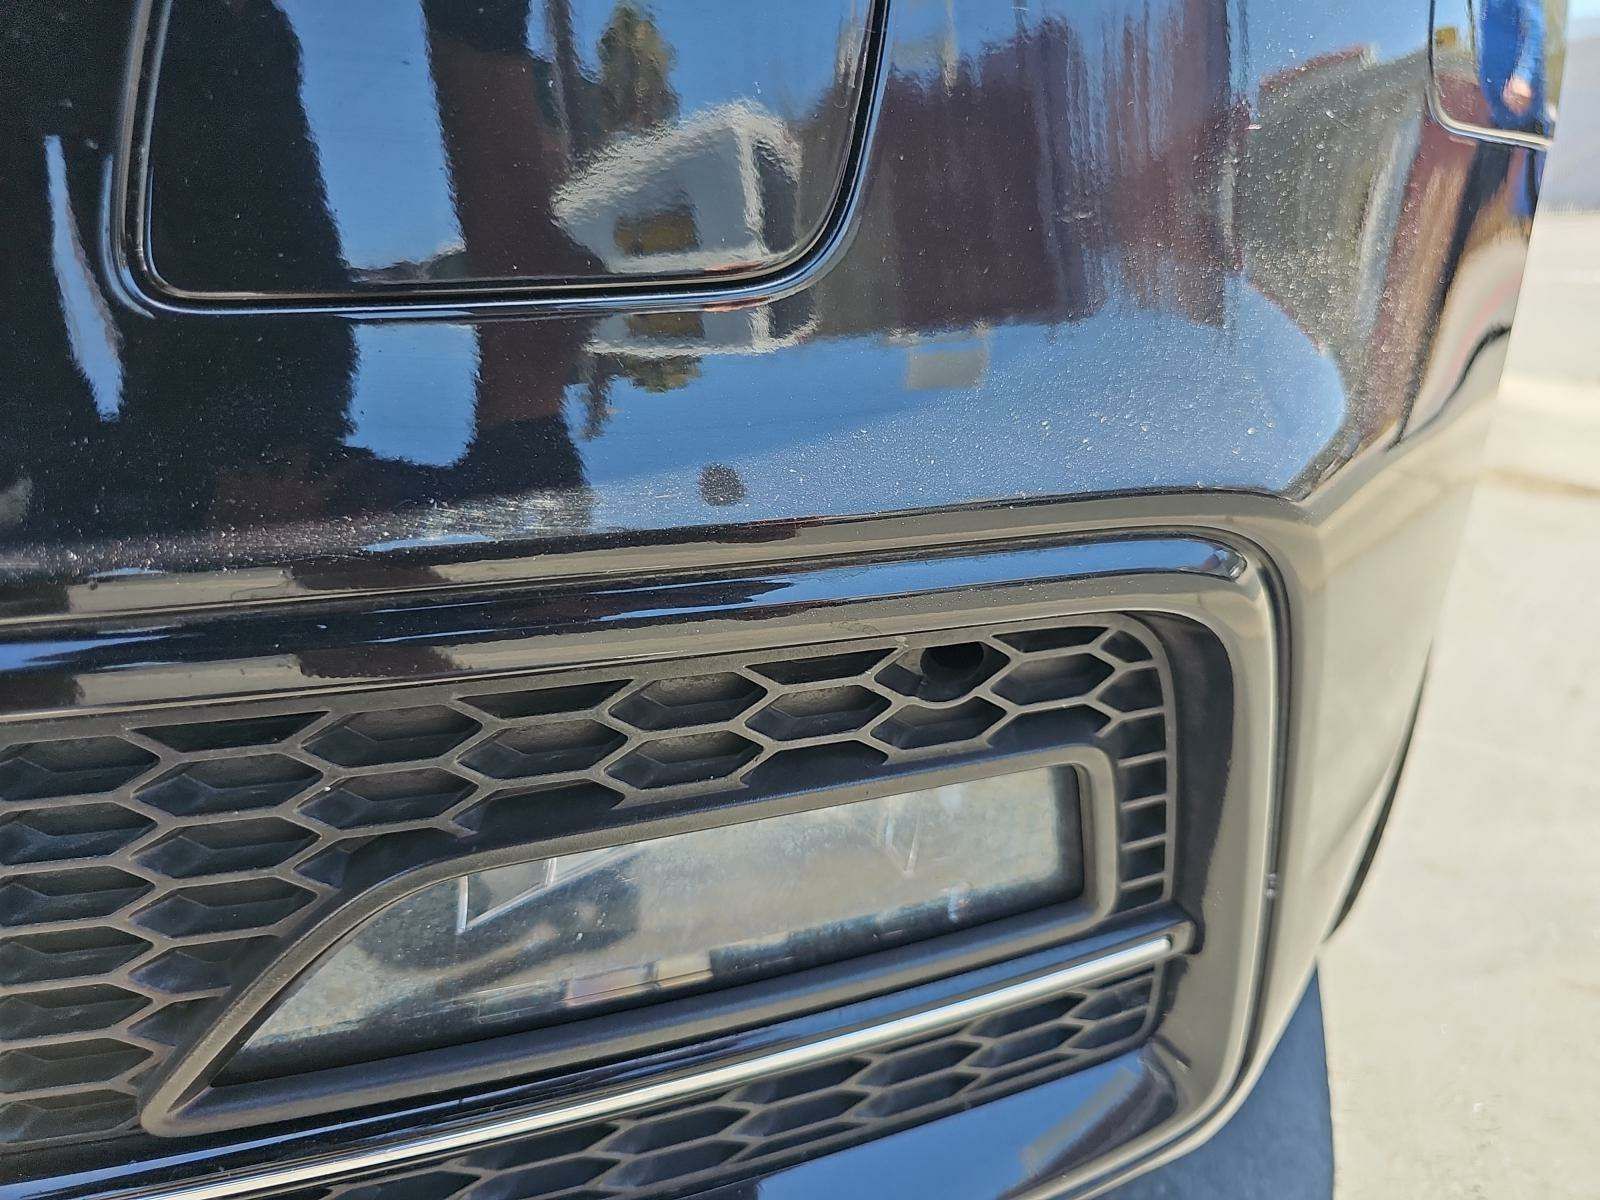 2015 Audi A4 2.0T Premium FWD